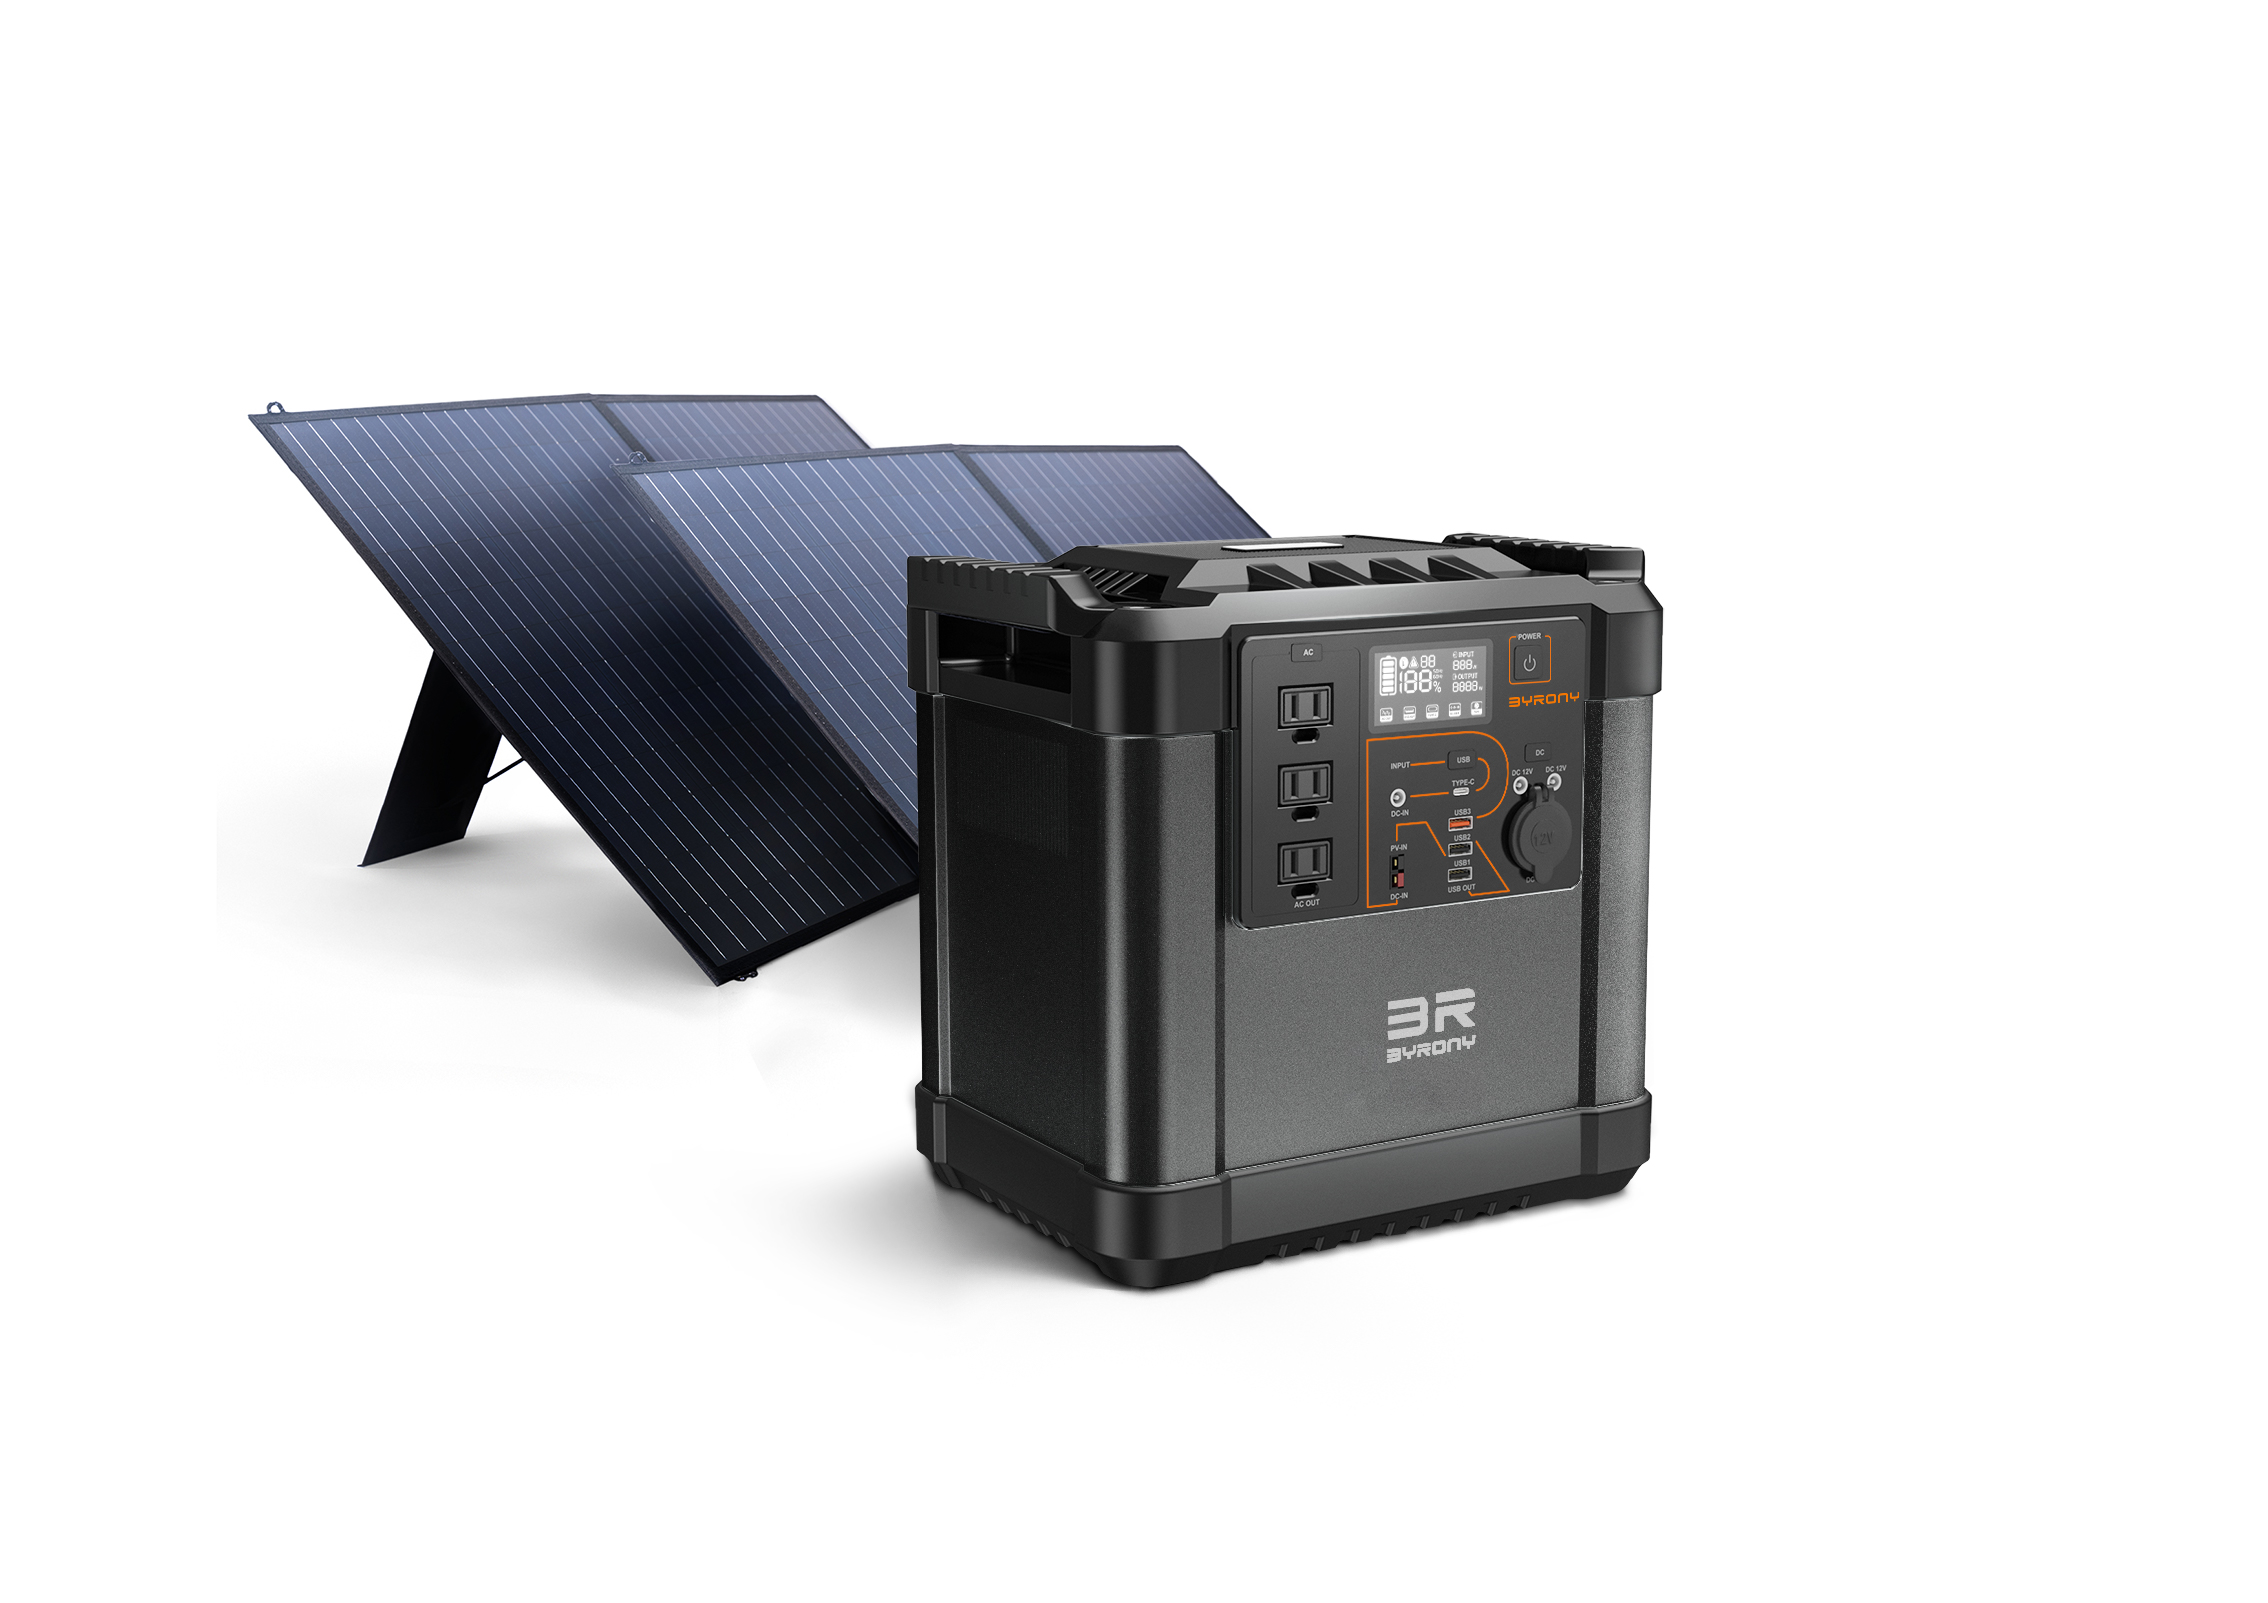 Byrony solar generator for camping